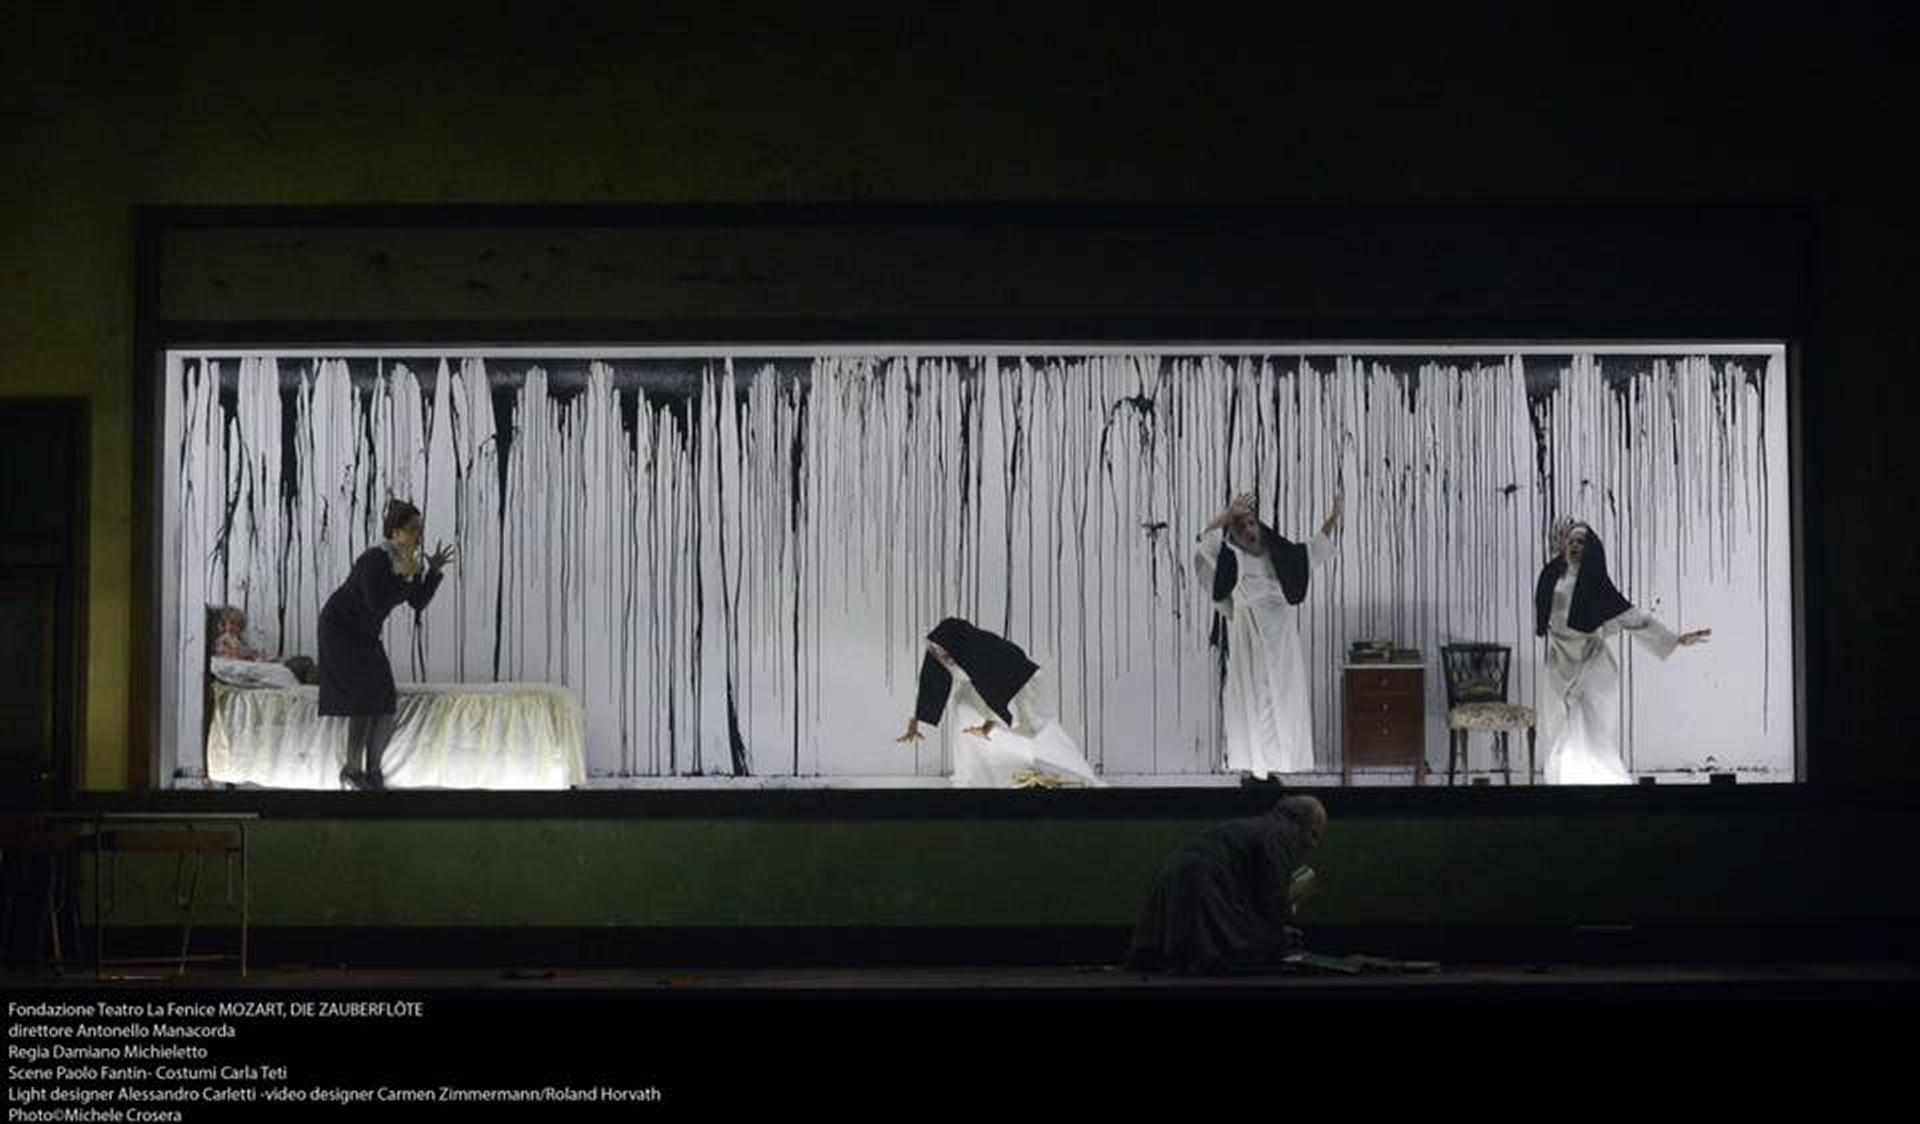 Die zauberflote - Teatro La Fenice - 2015 - Photo #4